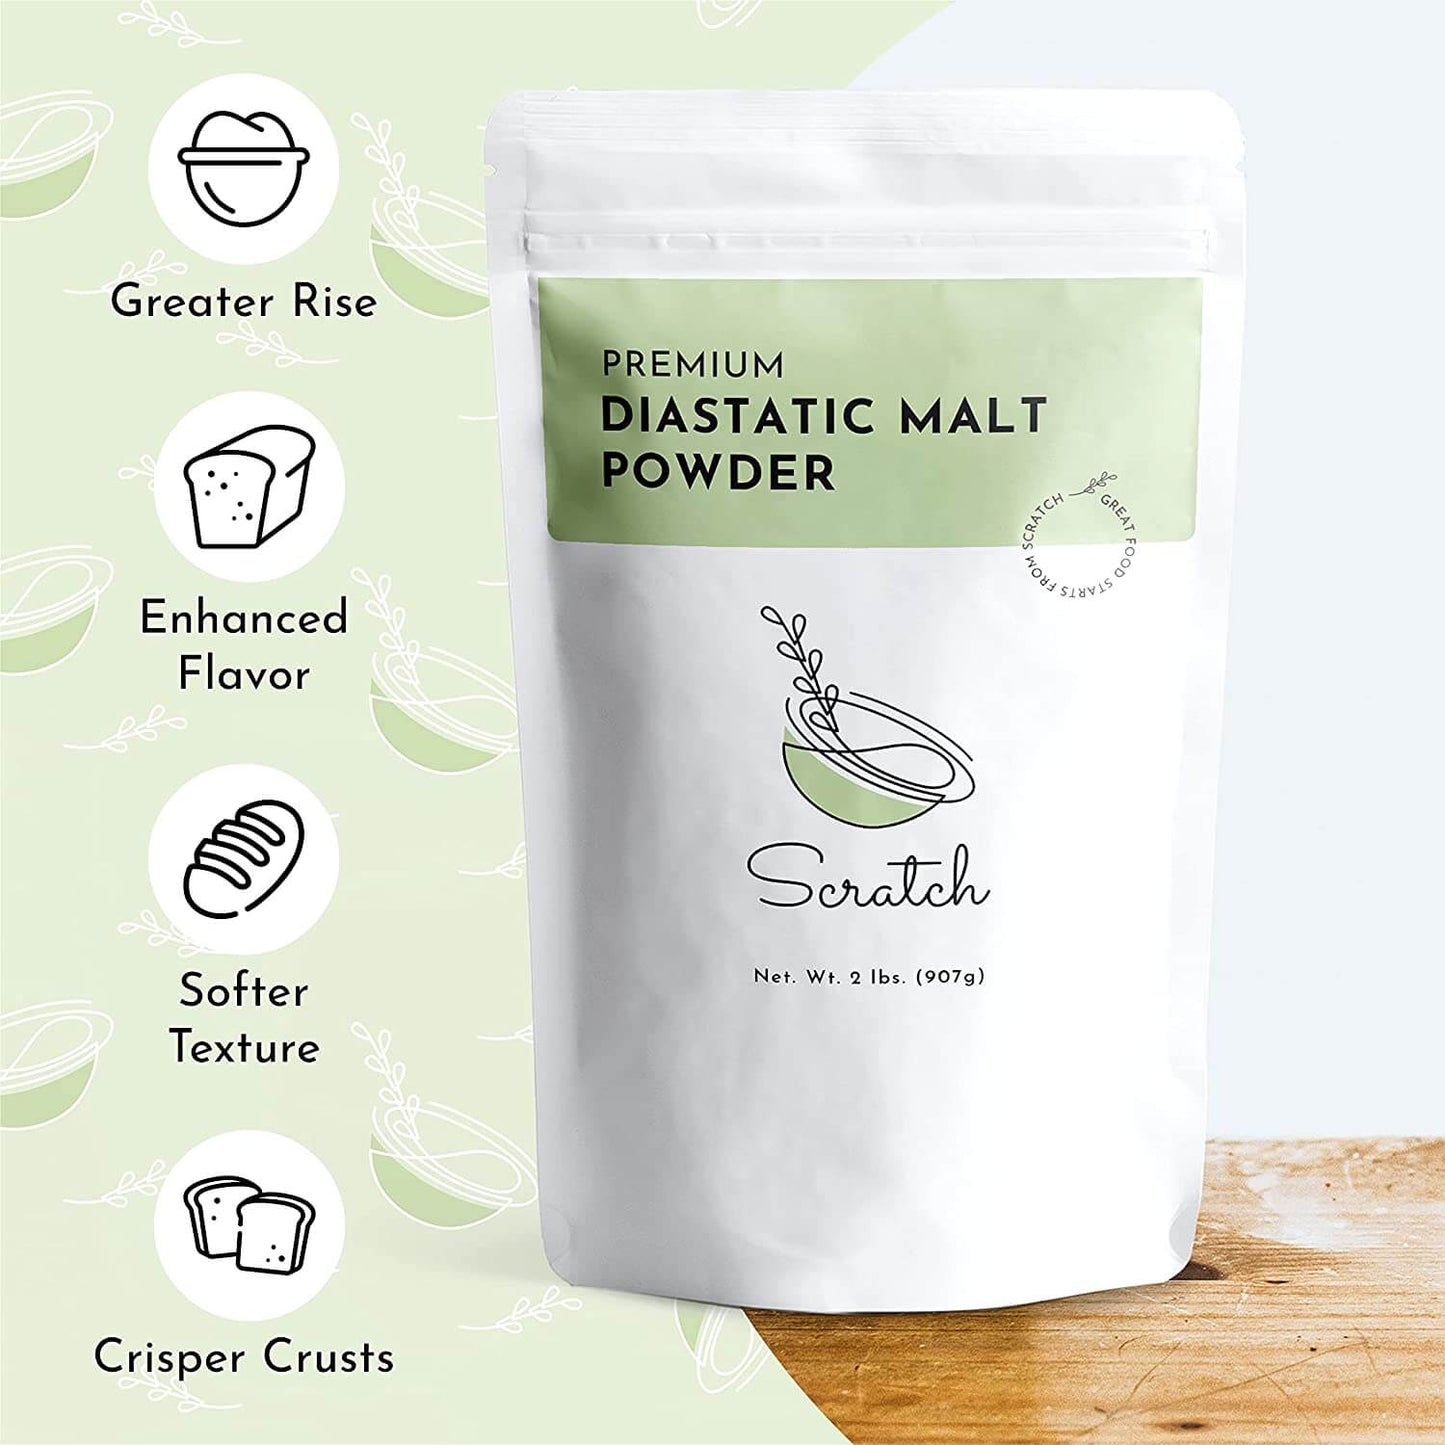 Scratch Diastatic Malt Powder for Baking - 2 lbs - Baking Properties